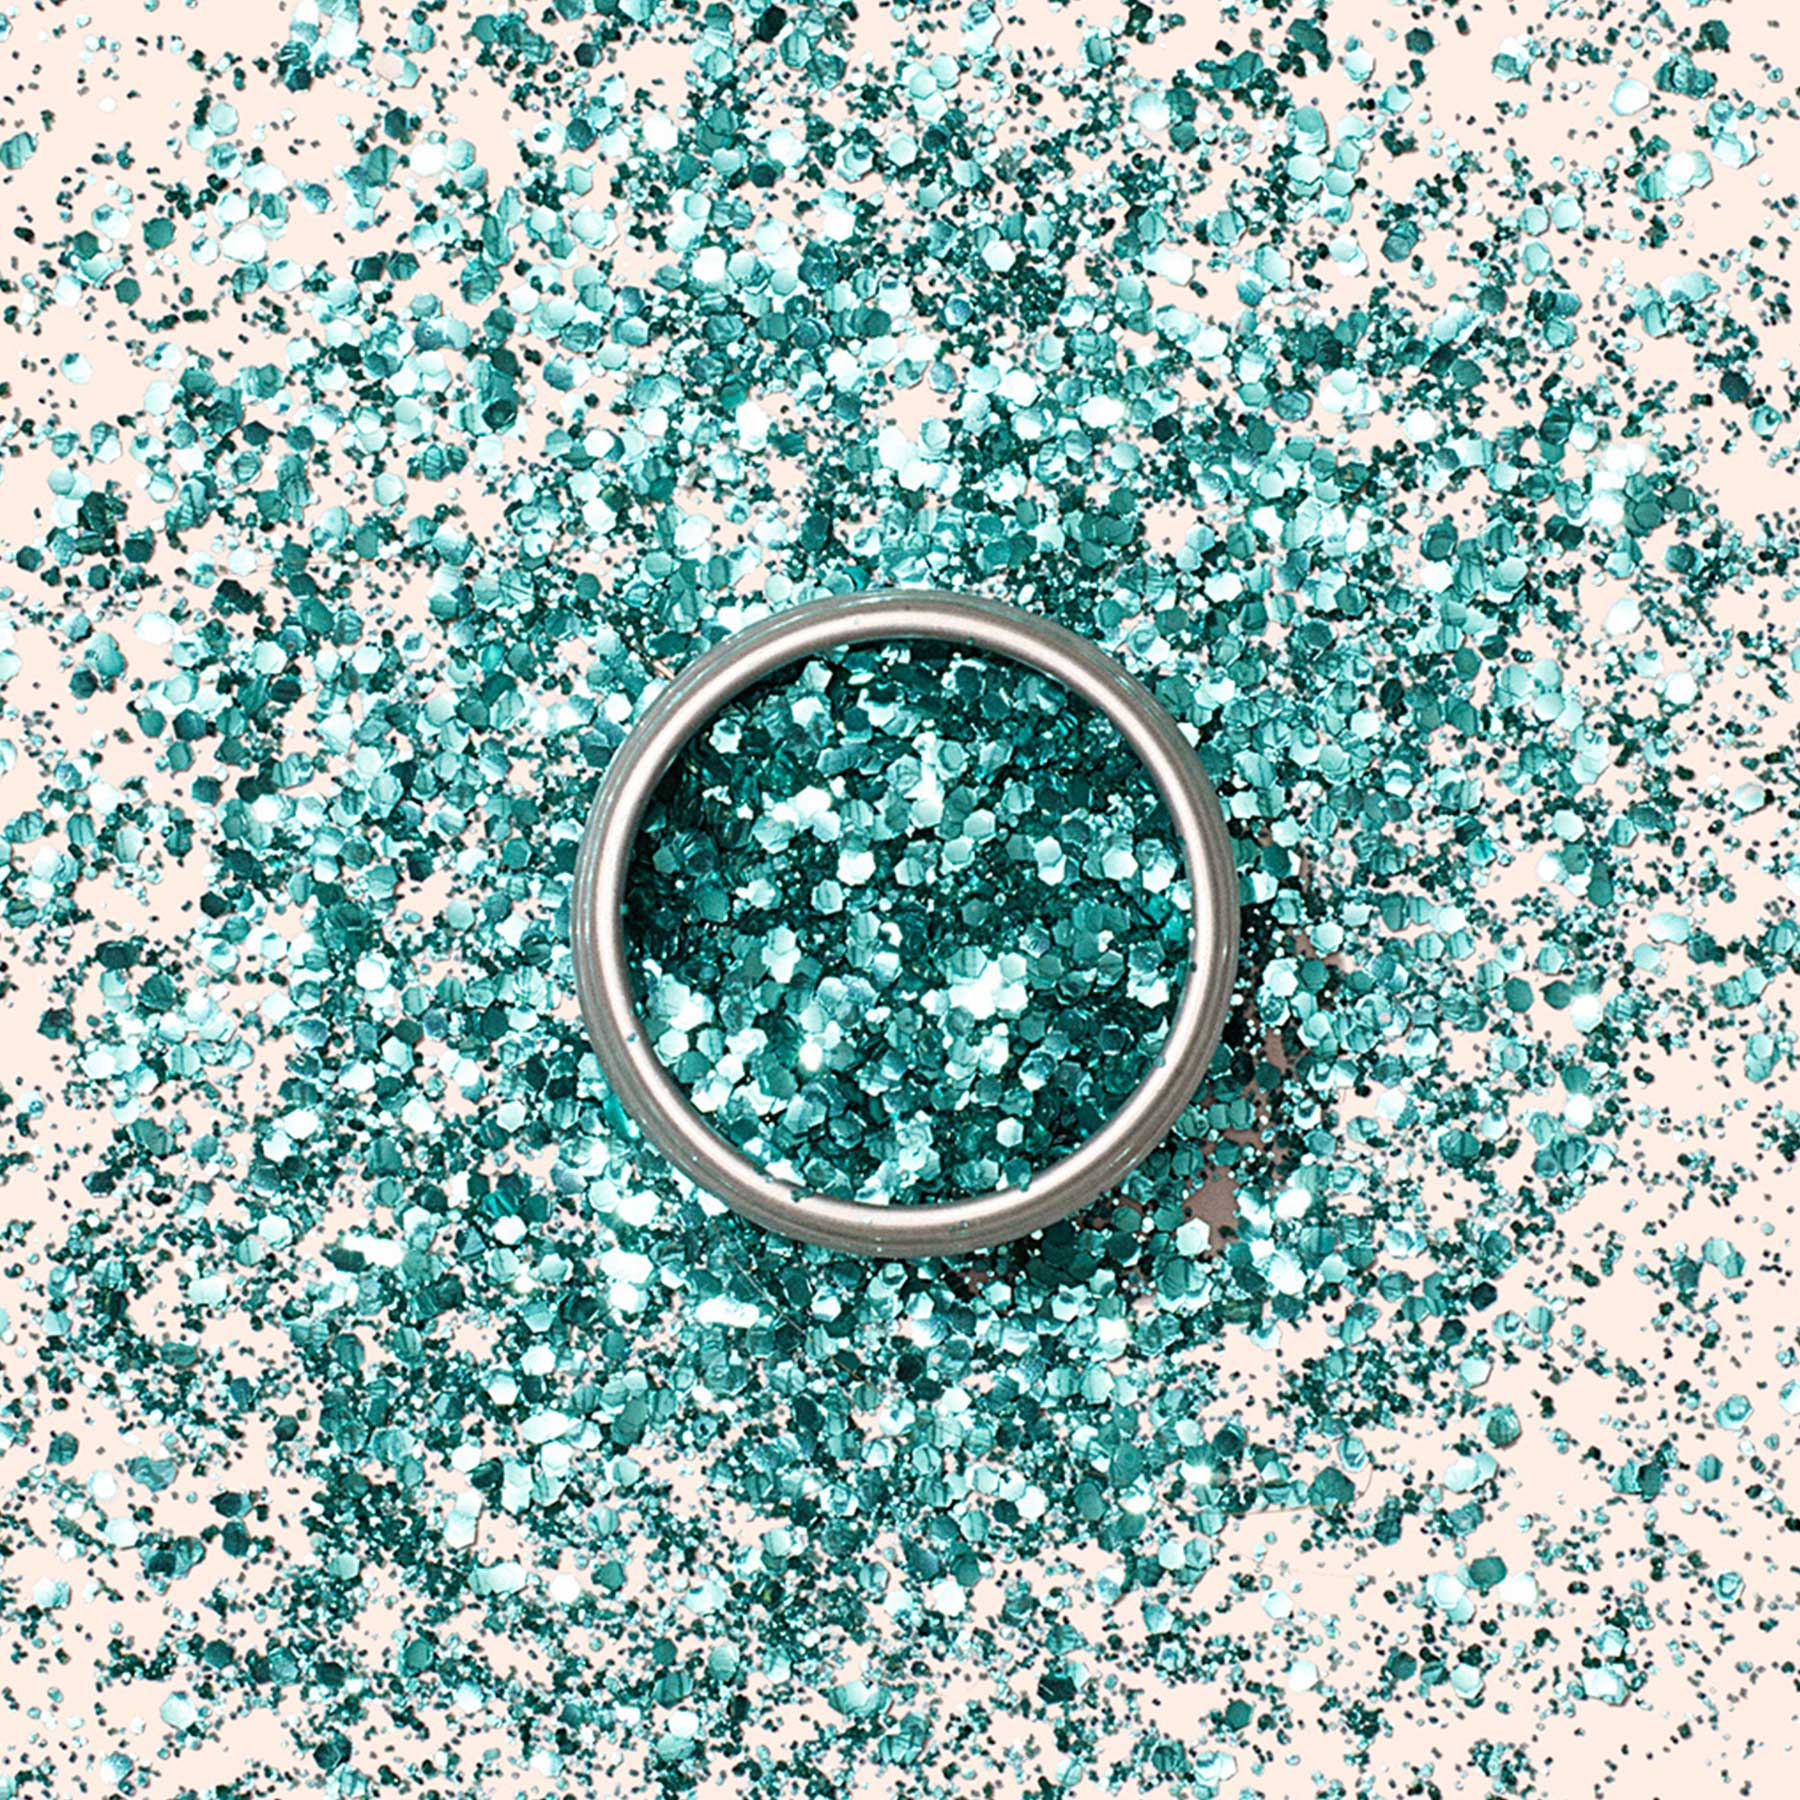 Turquoise biodegradable glitter